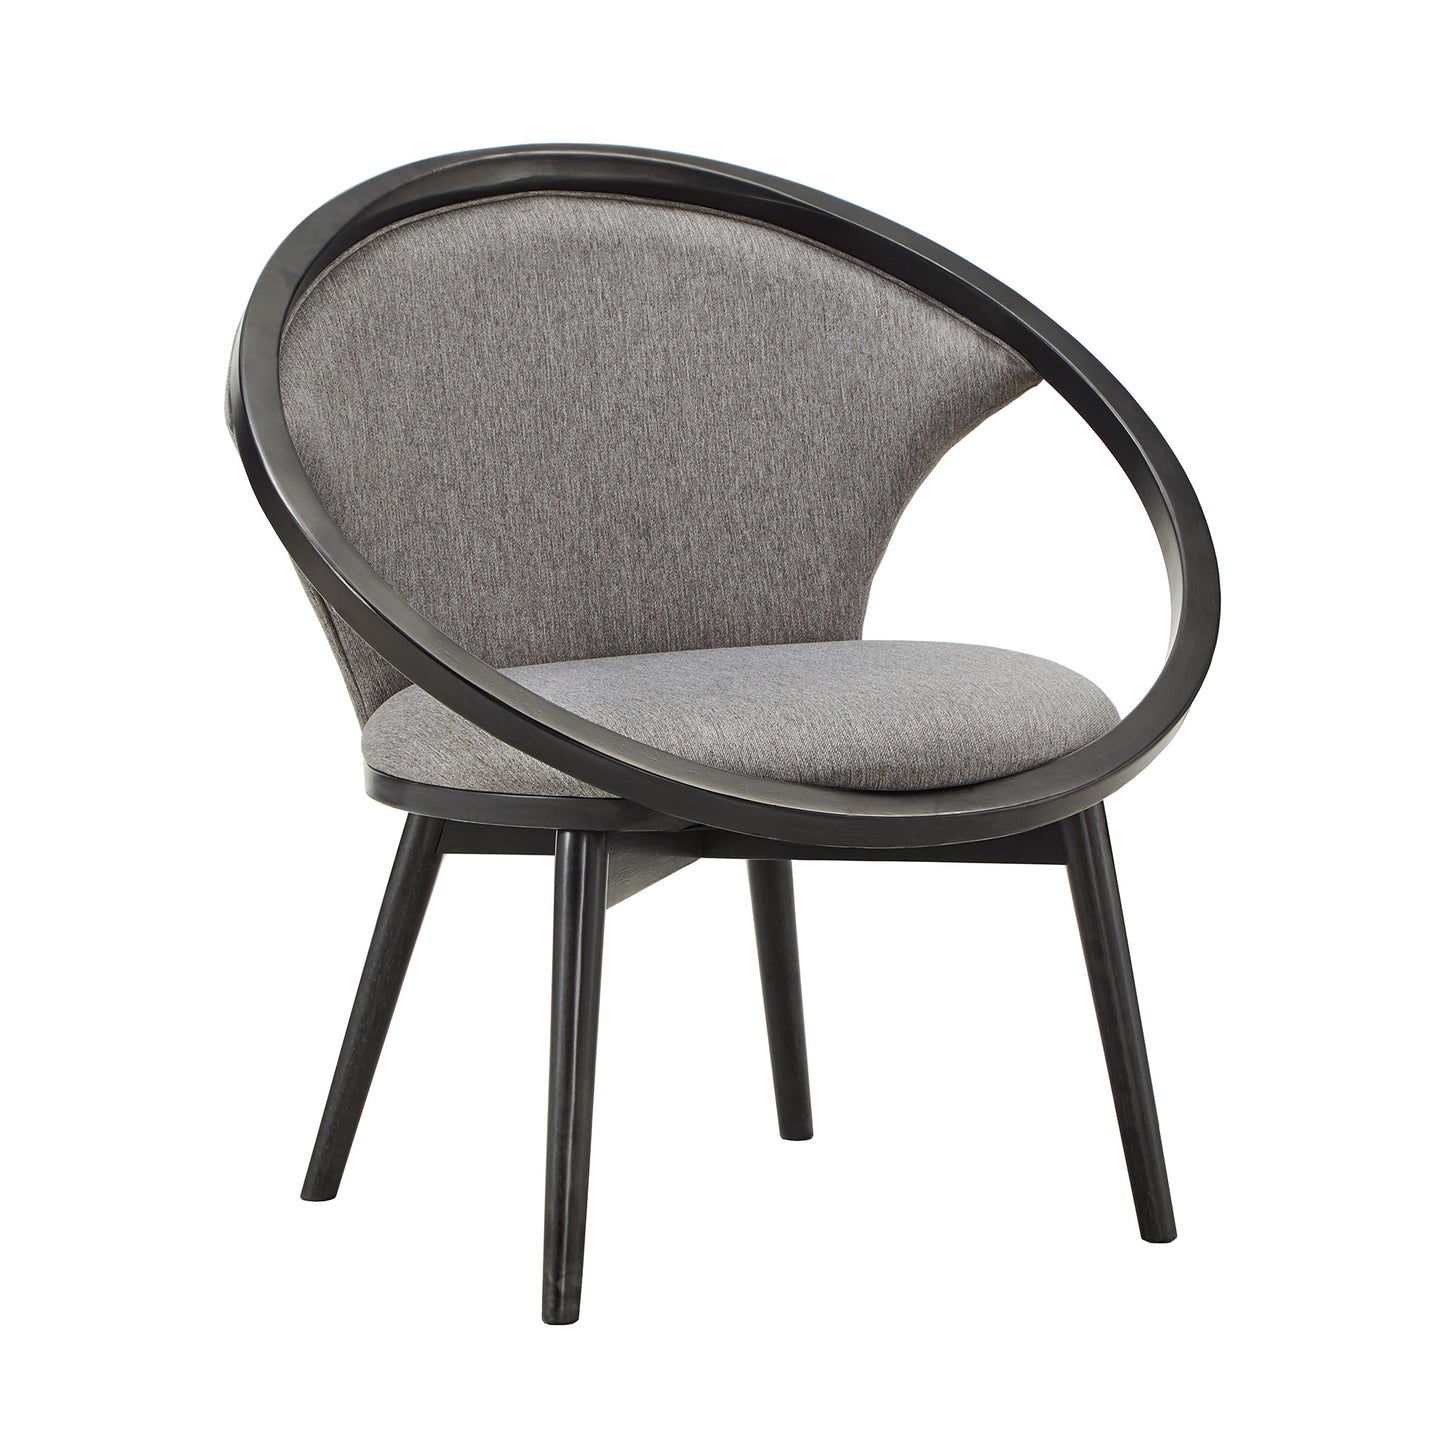 32" Wide Fabric Upholstered Accent Barrel Chair - Dark Charcoal Finish, Grey Herringbone Fabric